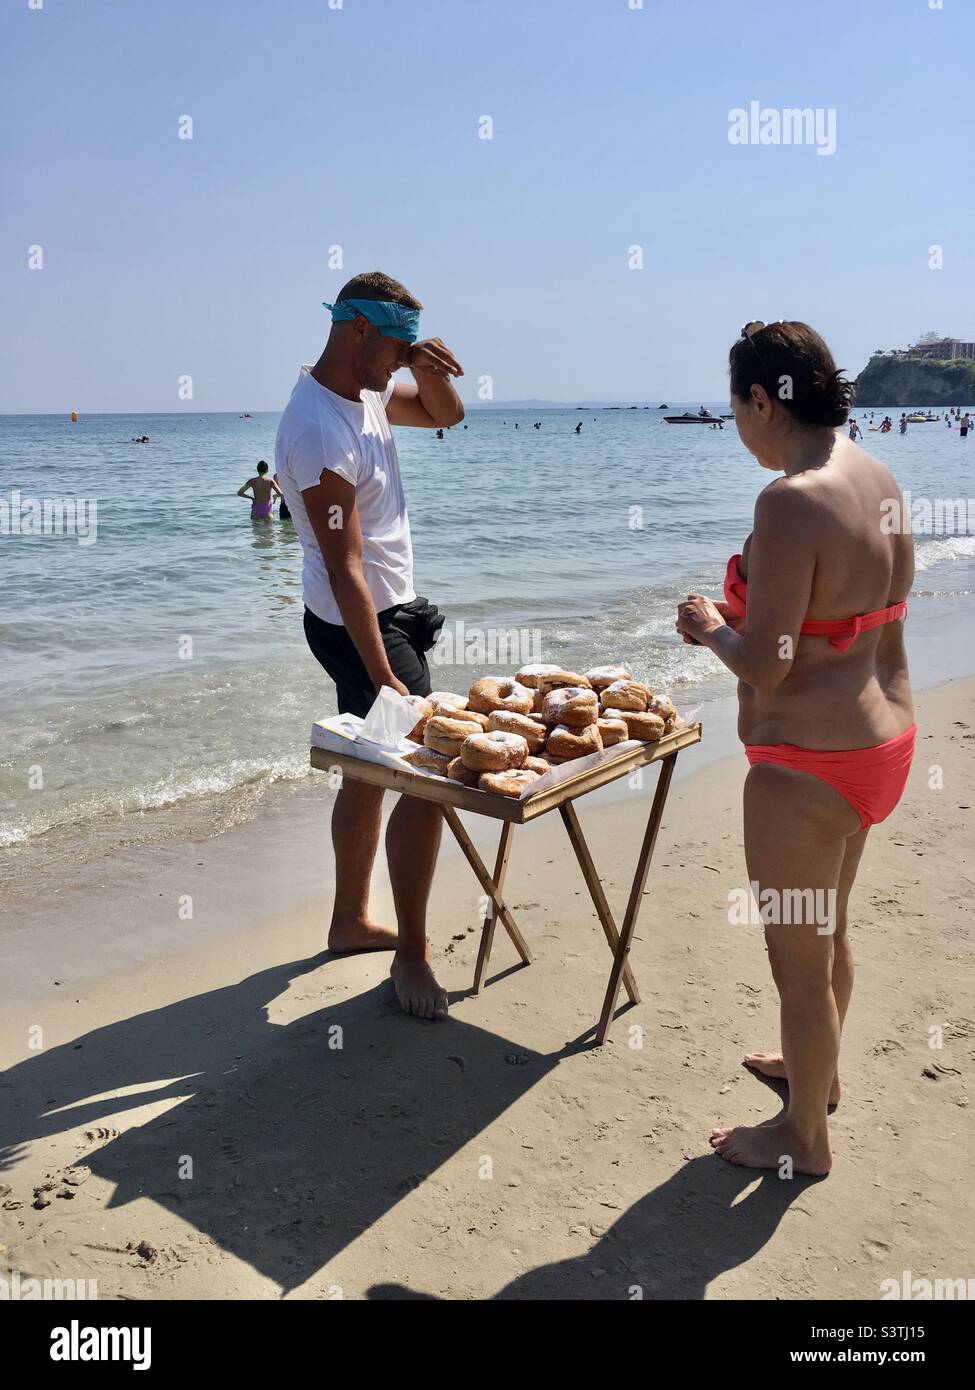 Man selling doughnuts on a beach in Greece Stock Photo